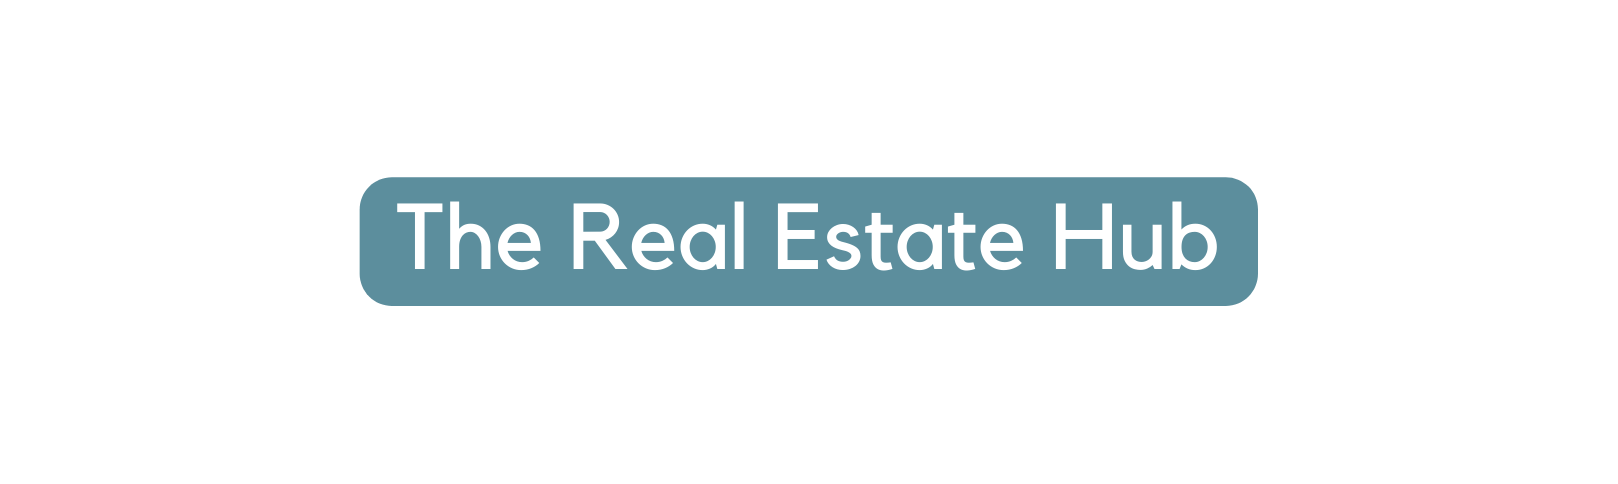 The Real Estate Hub